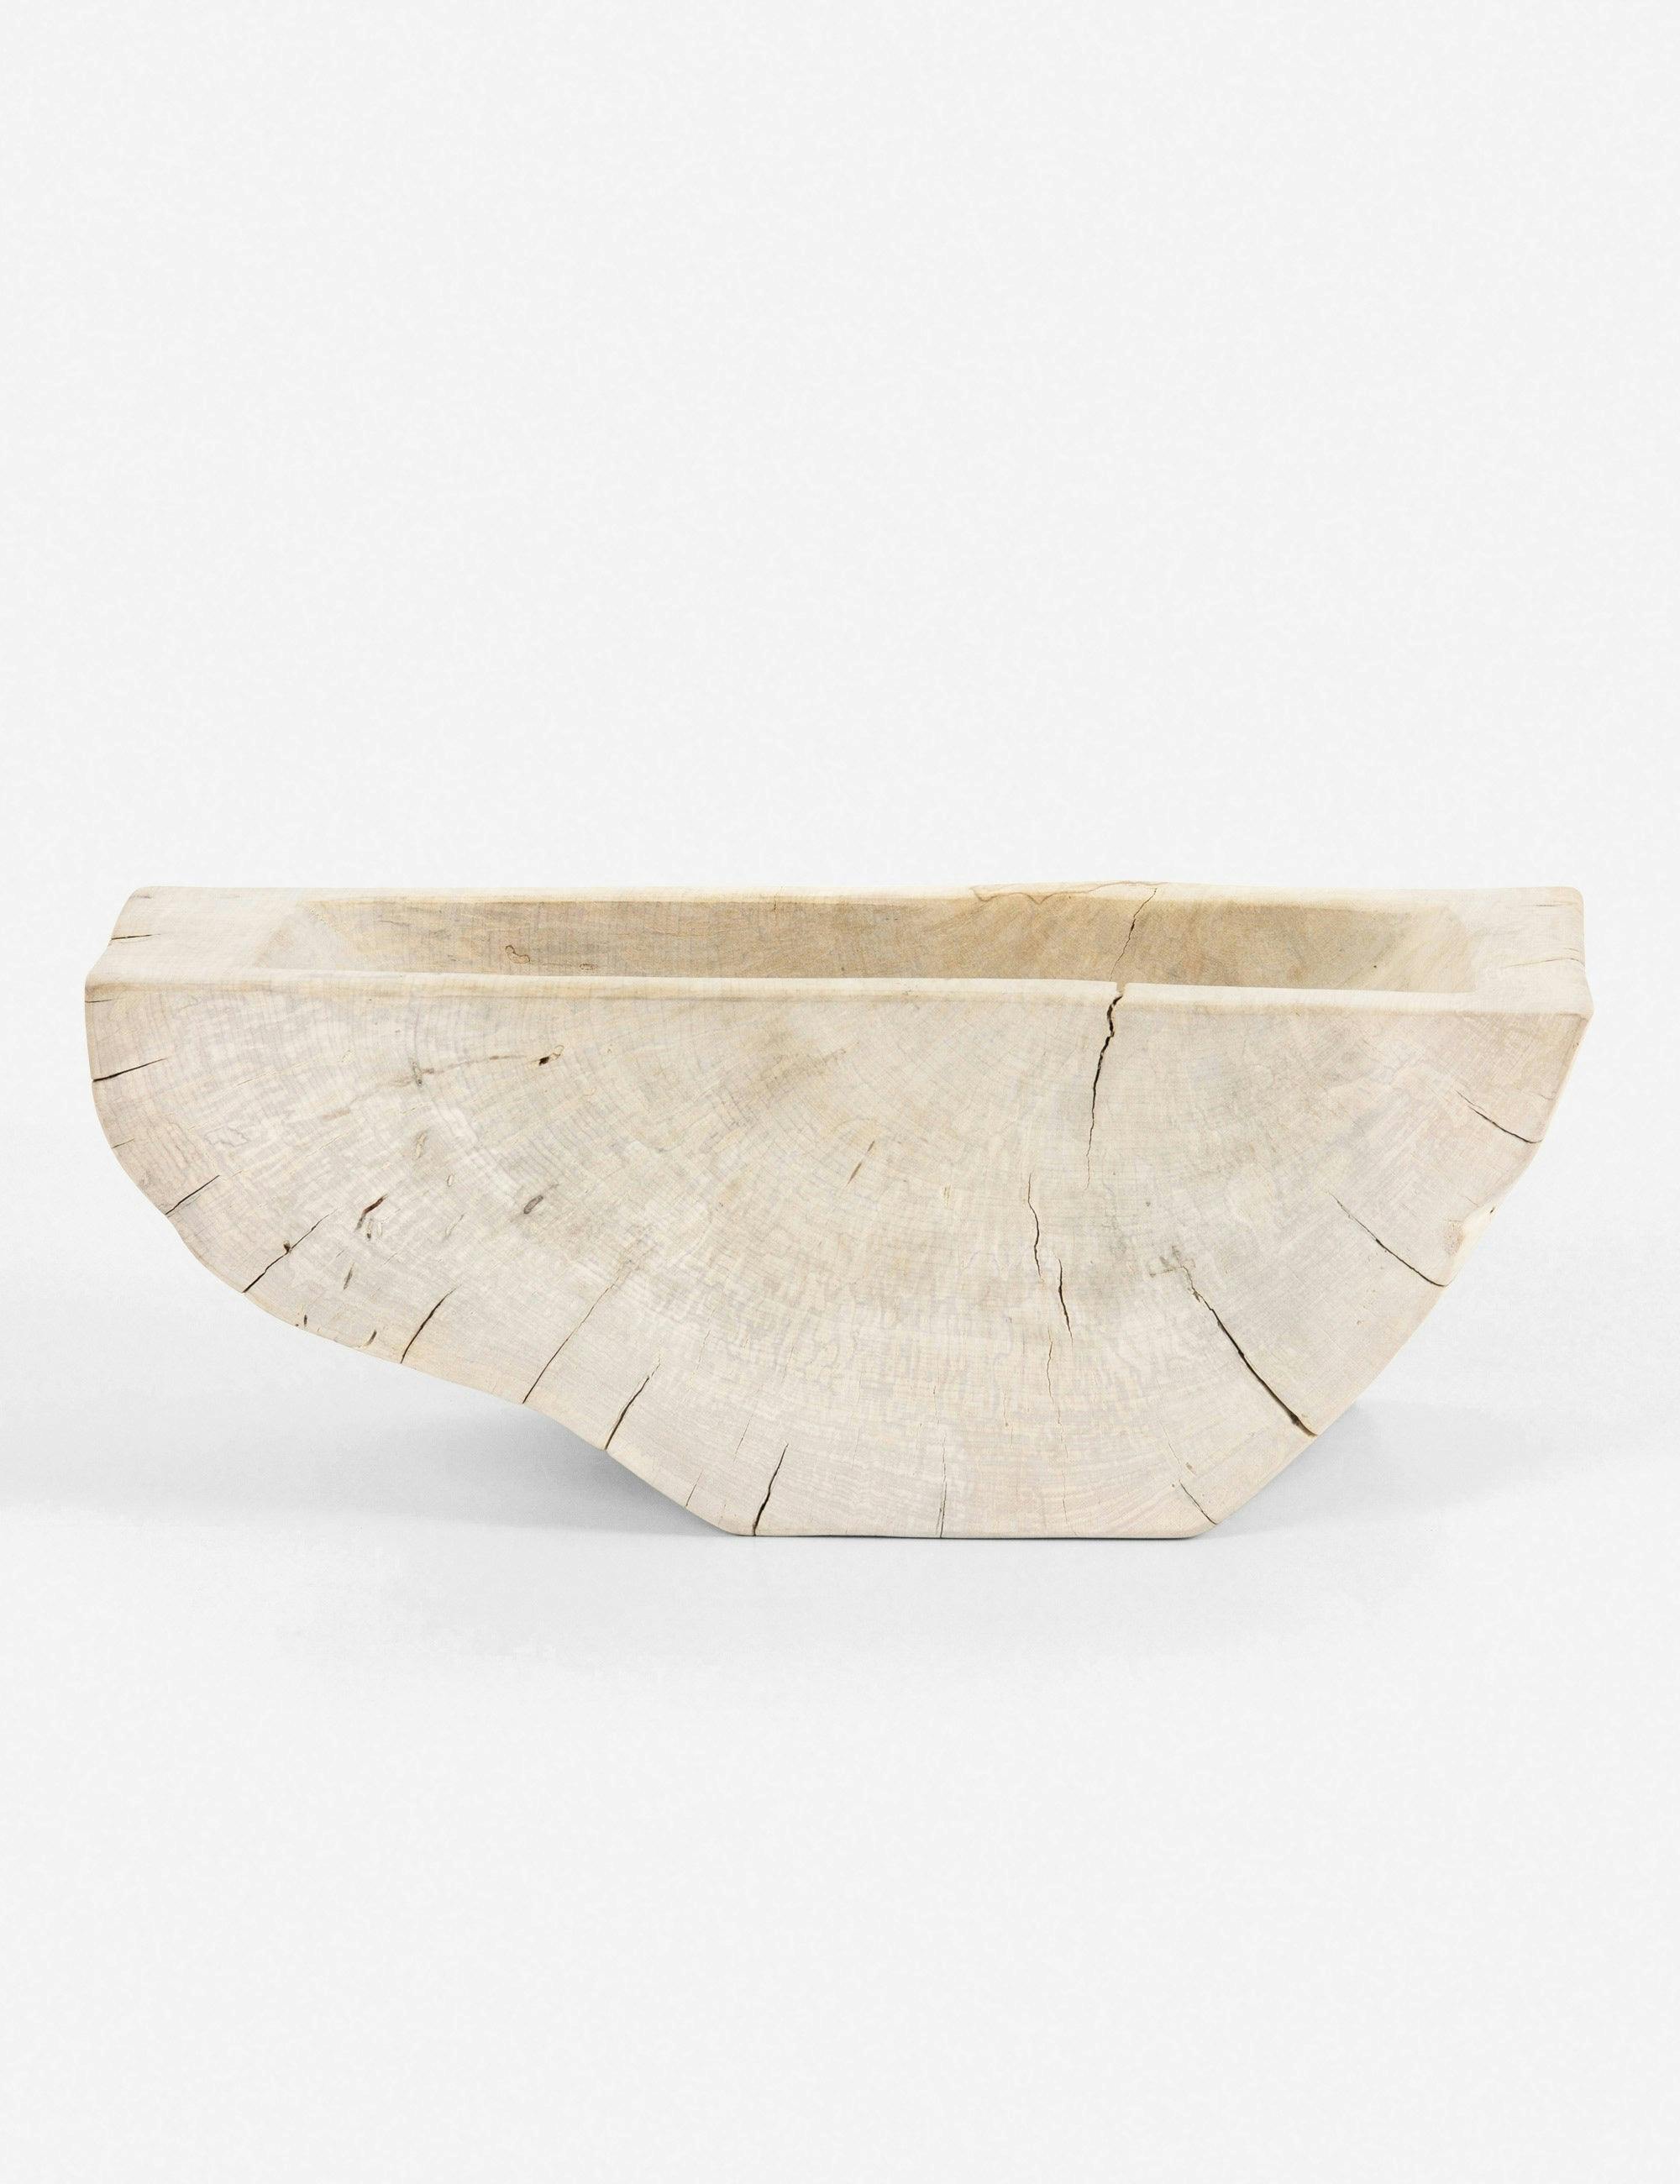 Lori Centro Ivory Wood Decorative Bowl